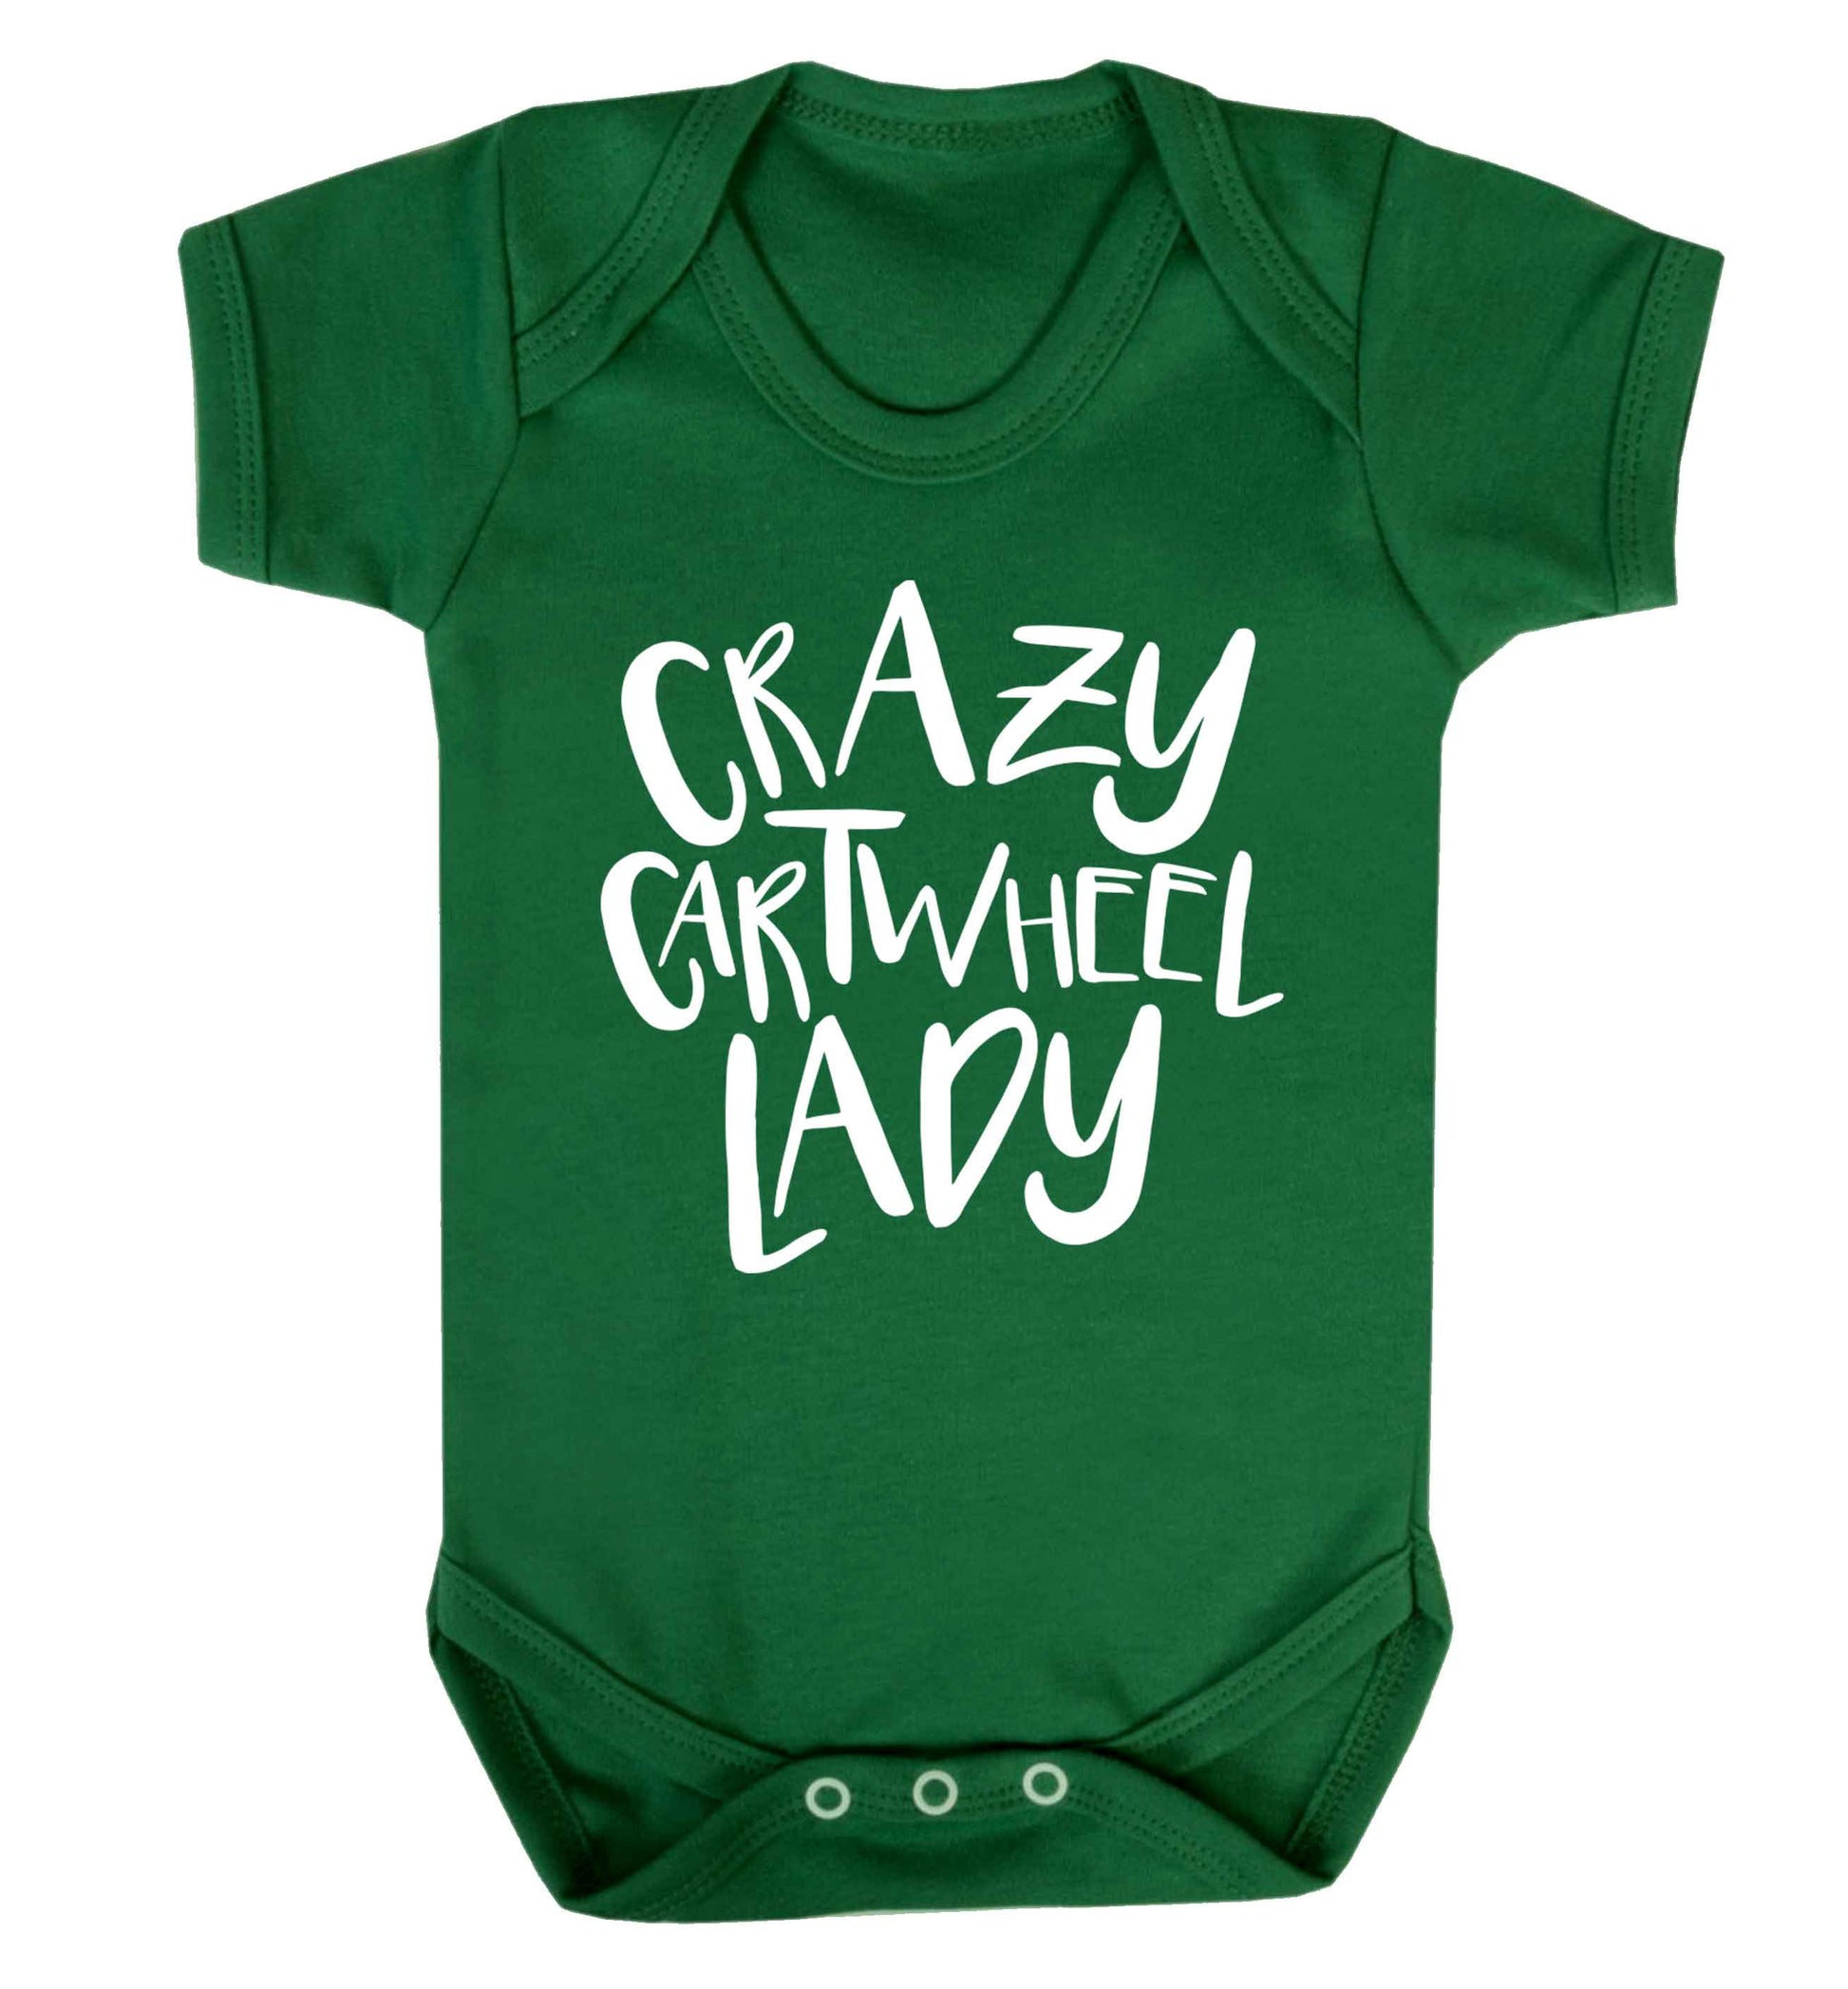 Crazy cartwheel lady Baby Vest green 18-24 months